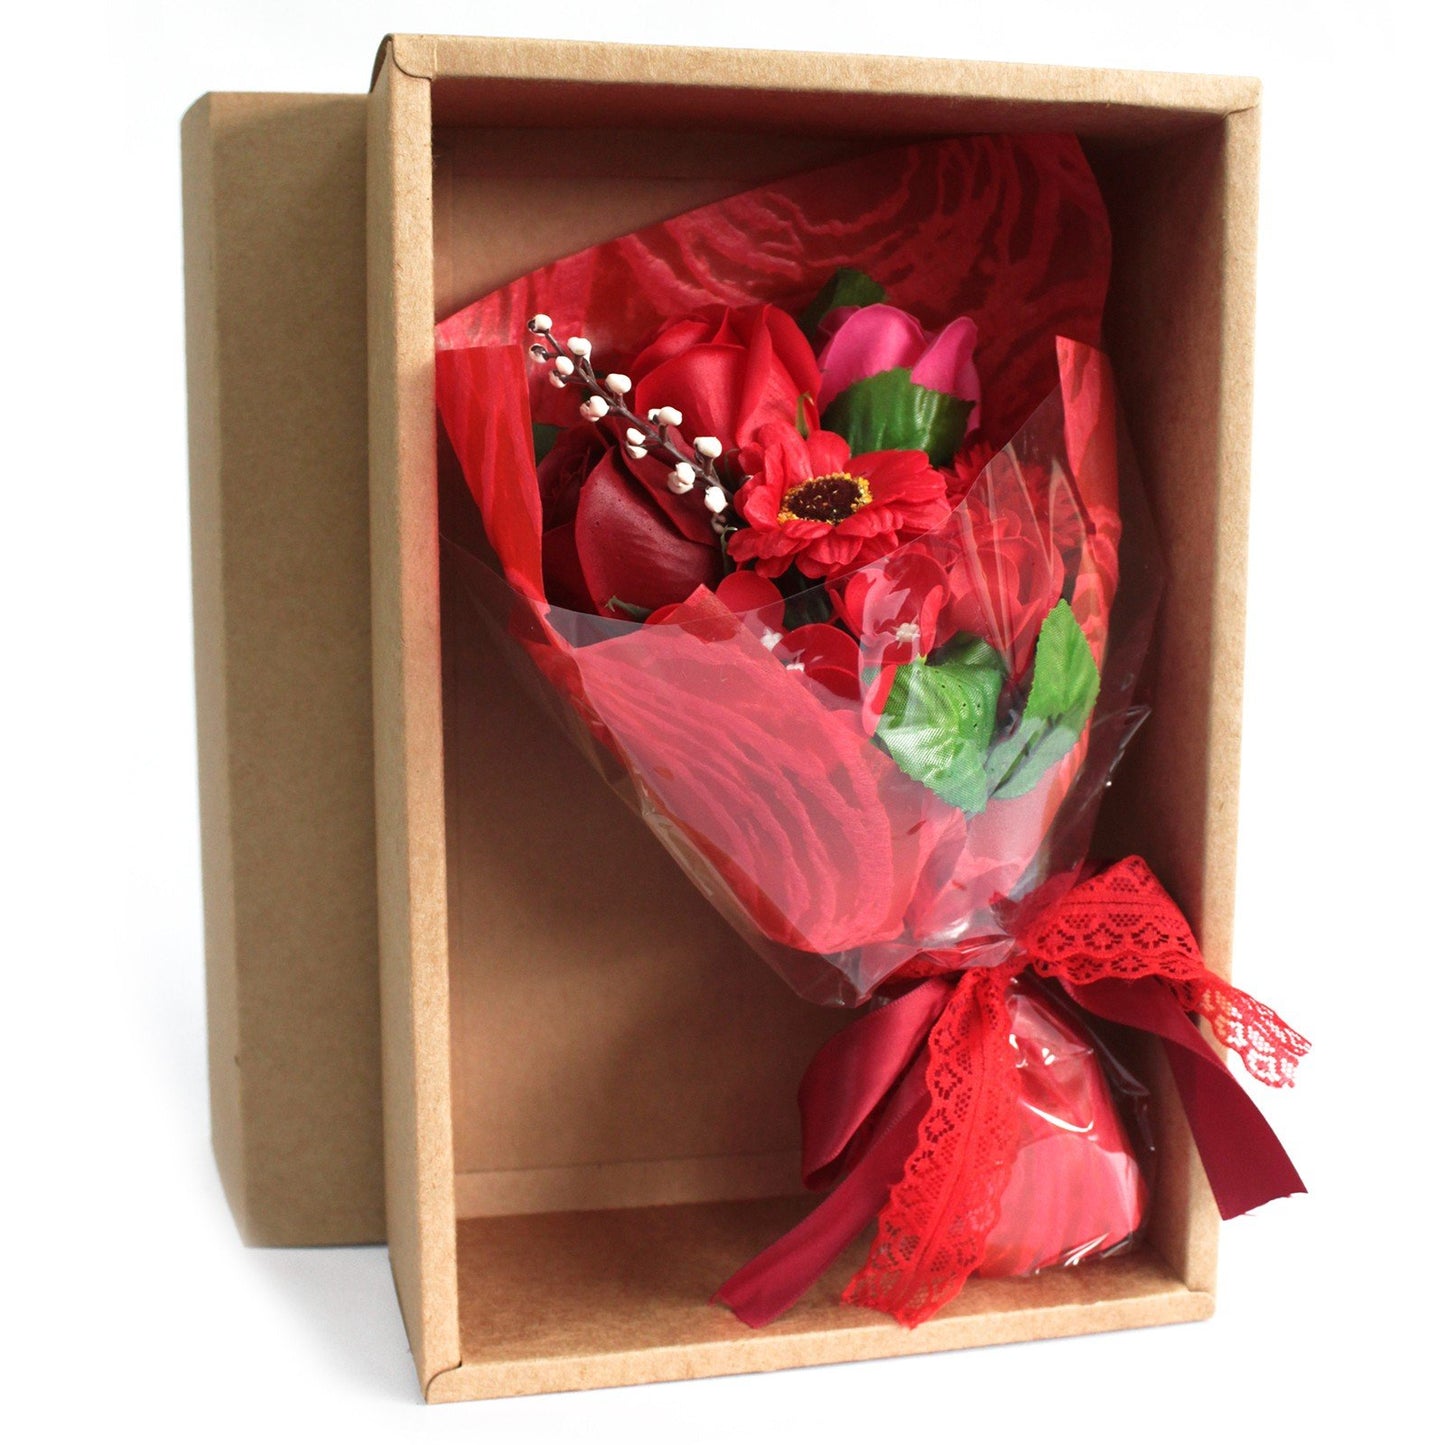 Boxed Soap Flower Bouquet - Reds